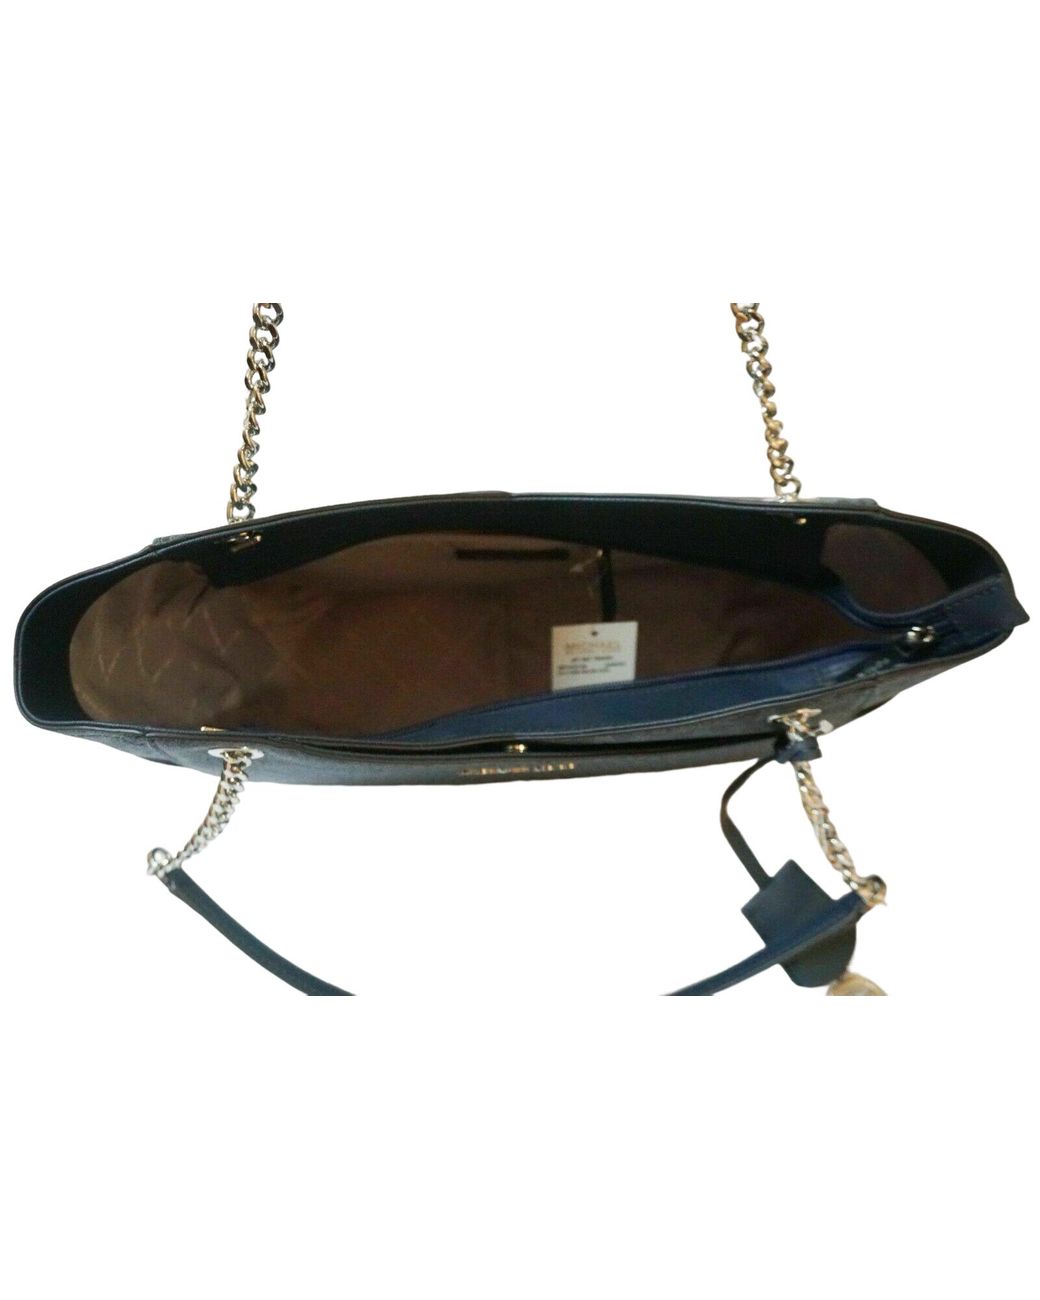 Michael Kors MK Signature Large Jet Set Shoulder Tote Bag with Chain, Black